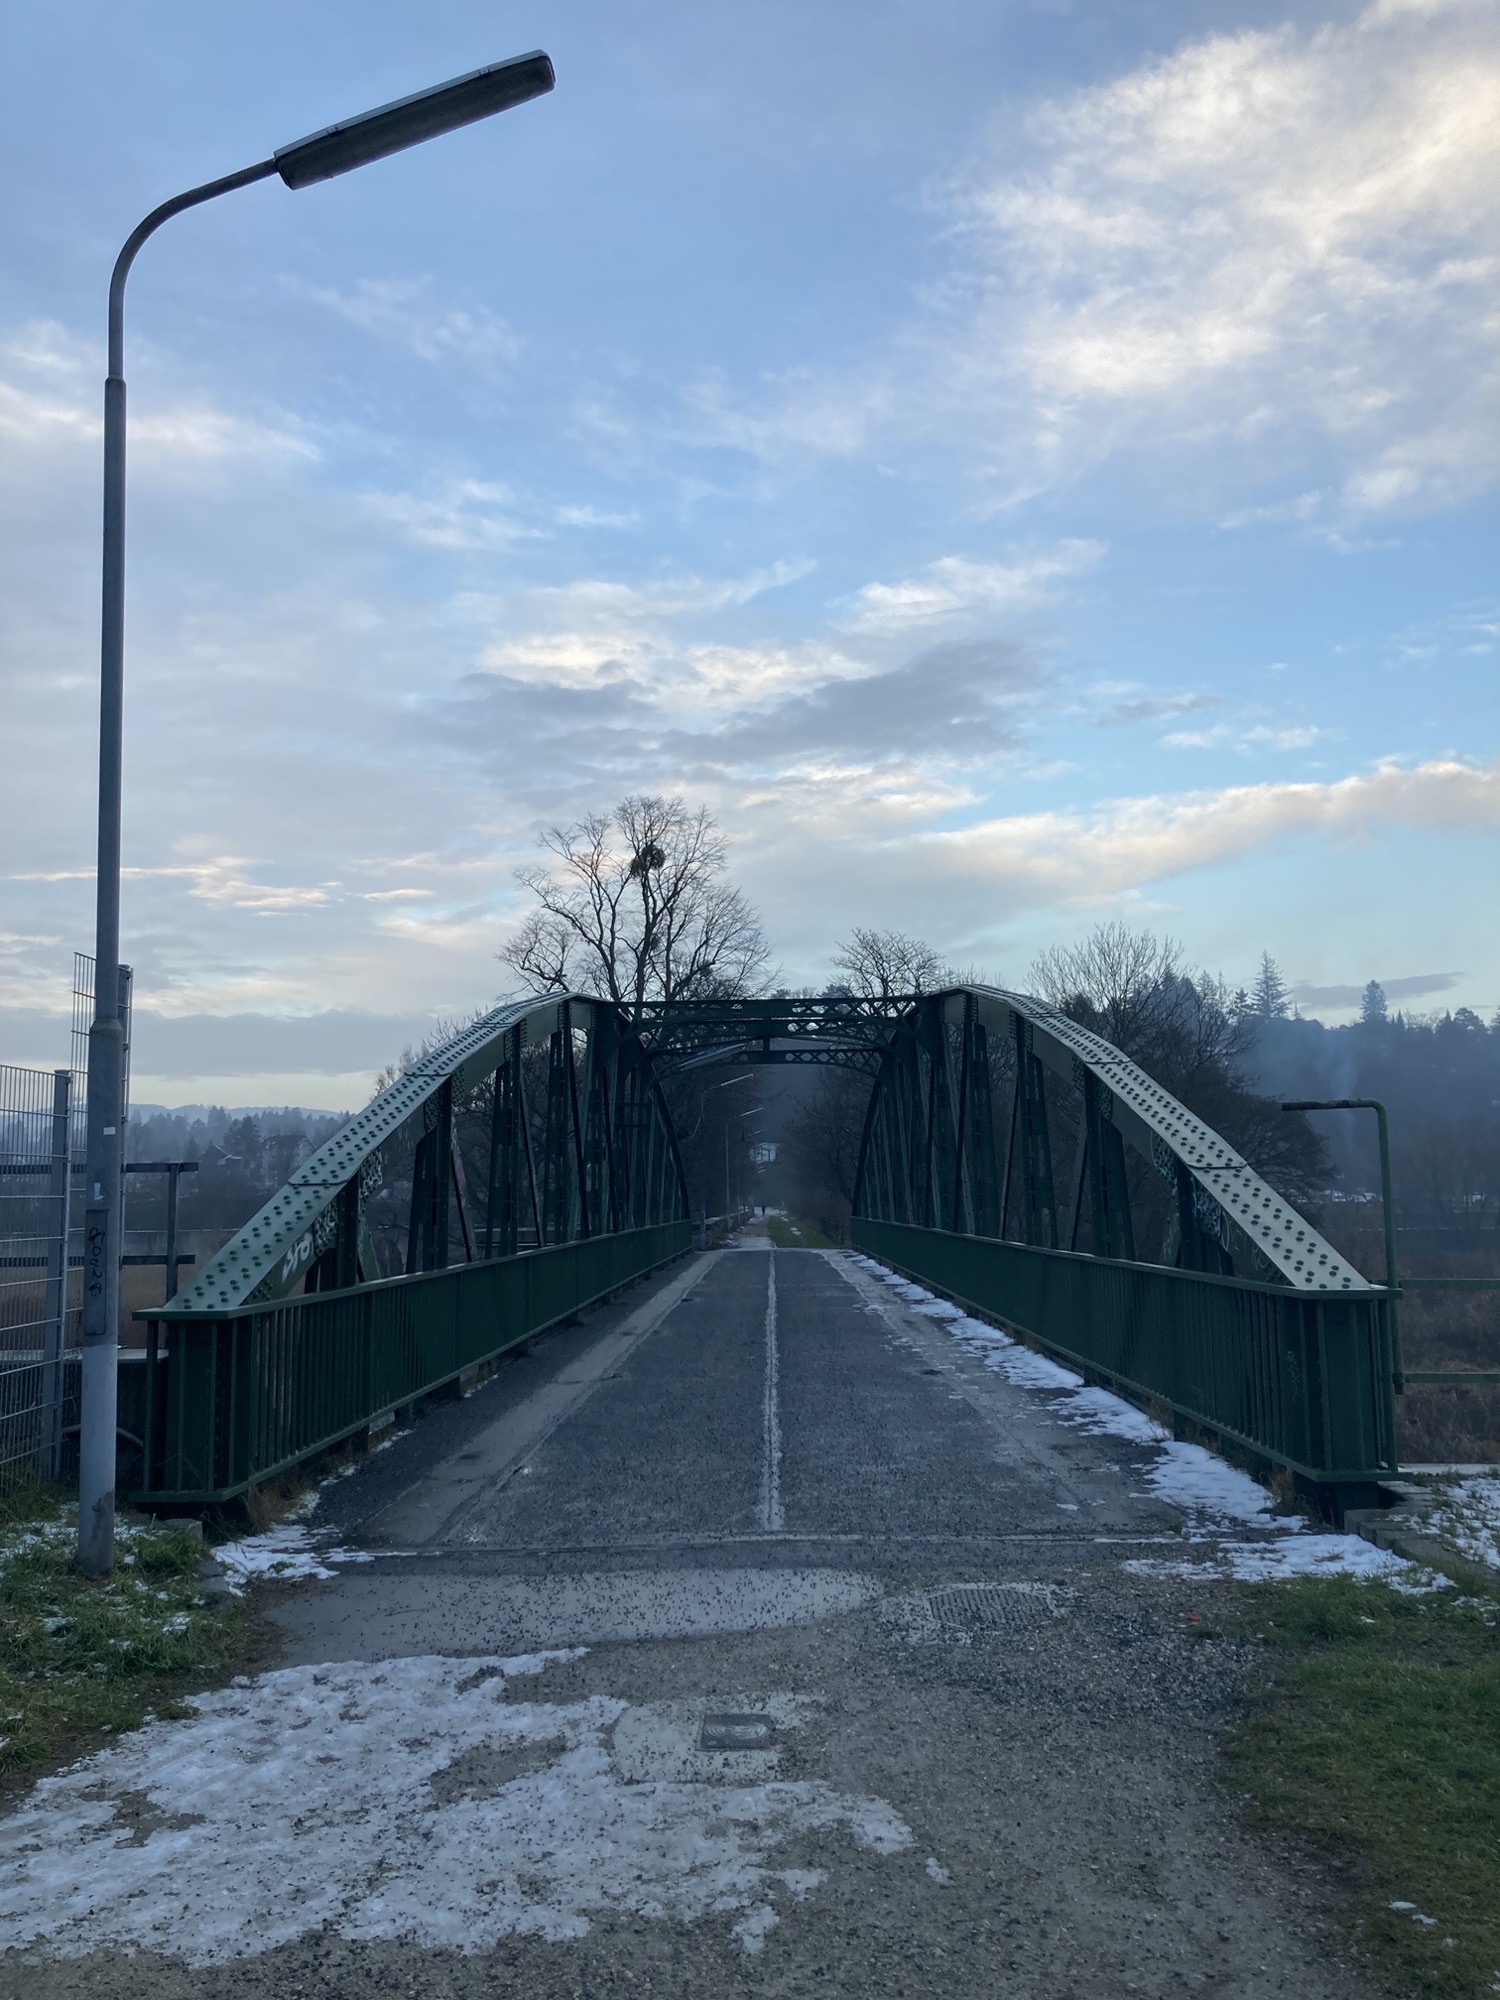 Brücke über den Wienfluss, grüne Metallkonstruktion an den Seiten, leicht bewölkter Himmel, düstere Stimmung, einzelne Schneeflecken am Boden